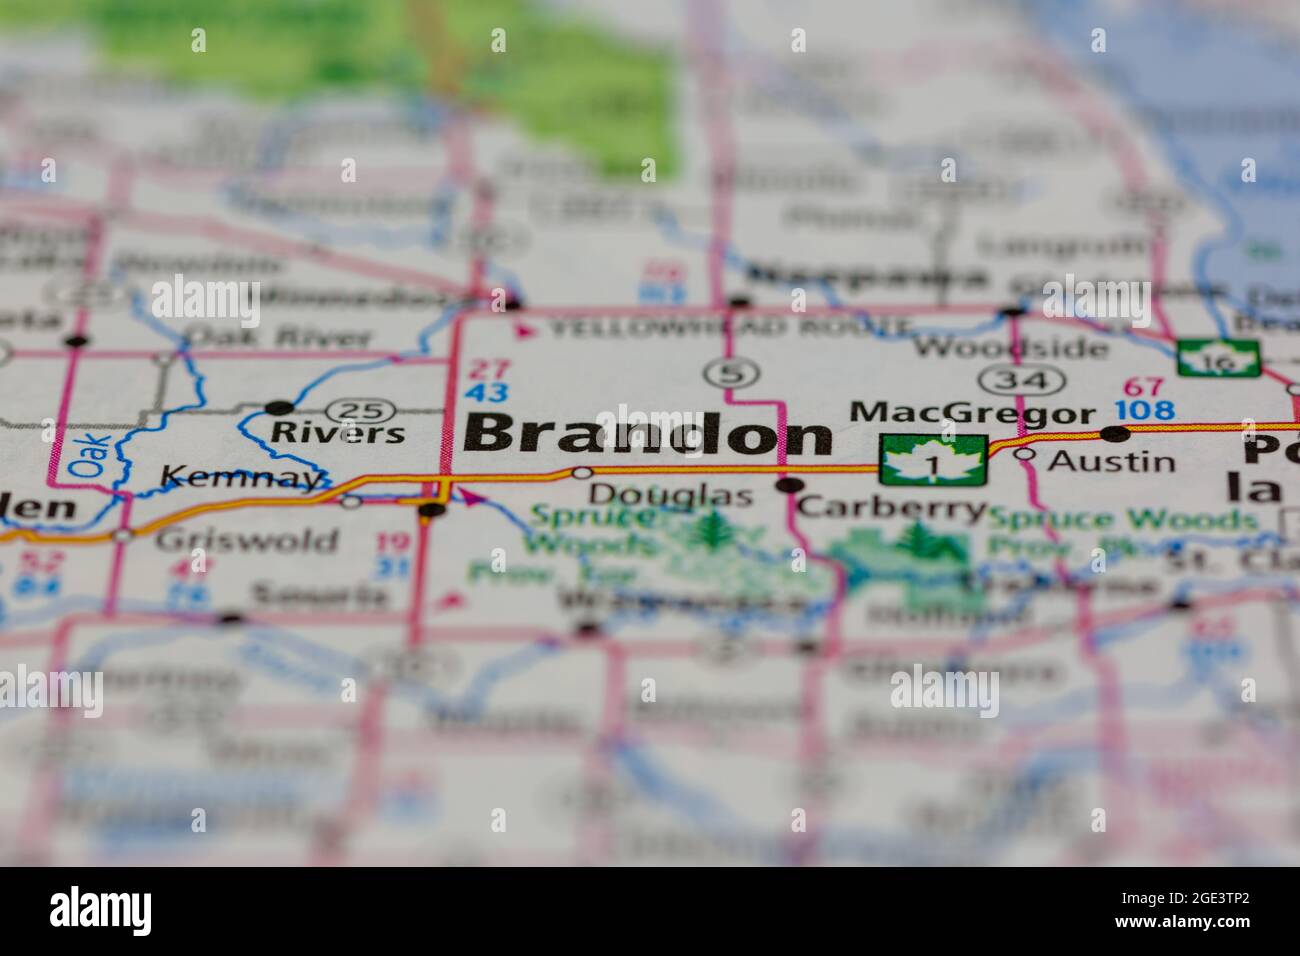 Brandon Saskatchewan Canada Shown on a road map or Geography map Stock Photo